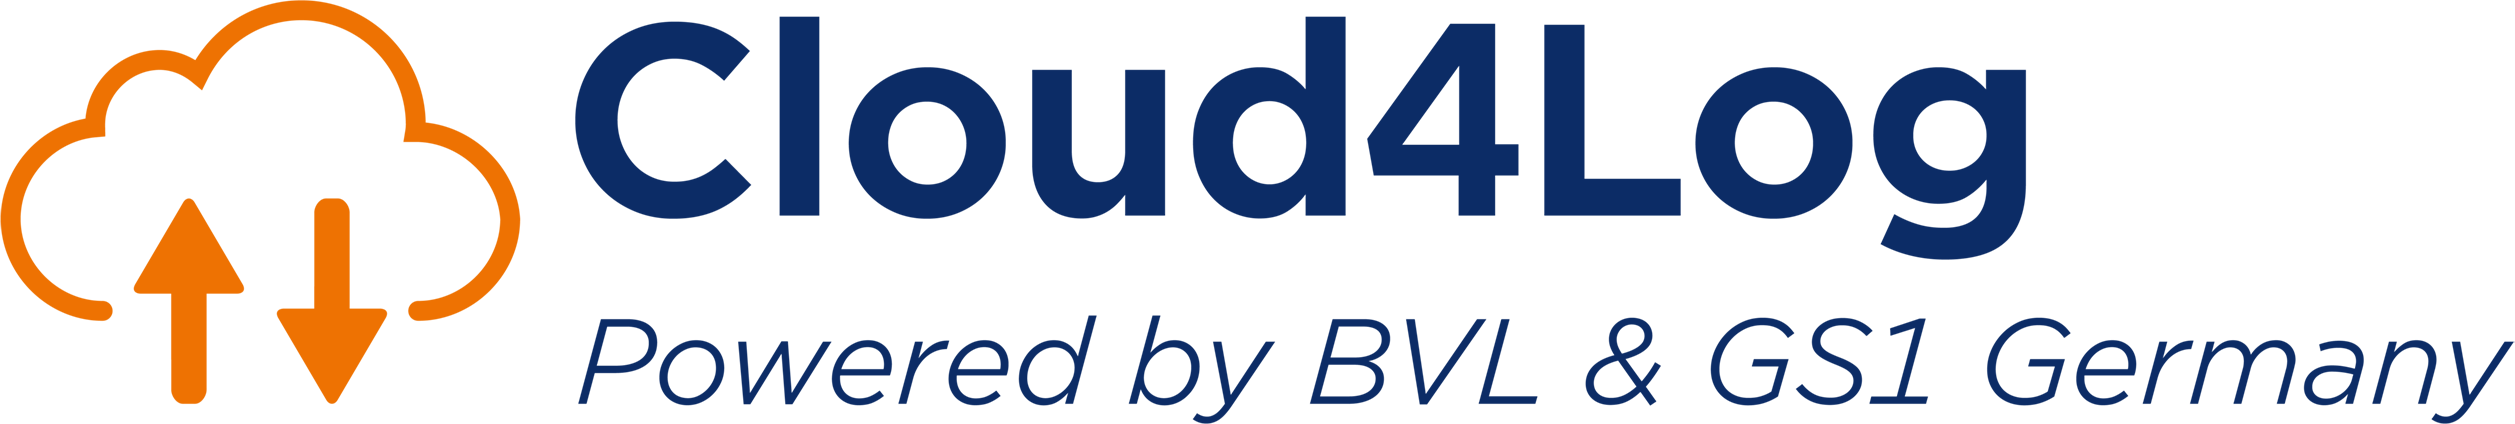 Cloud4Log-Logo